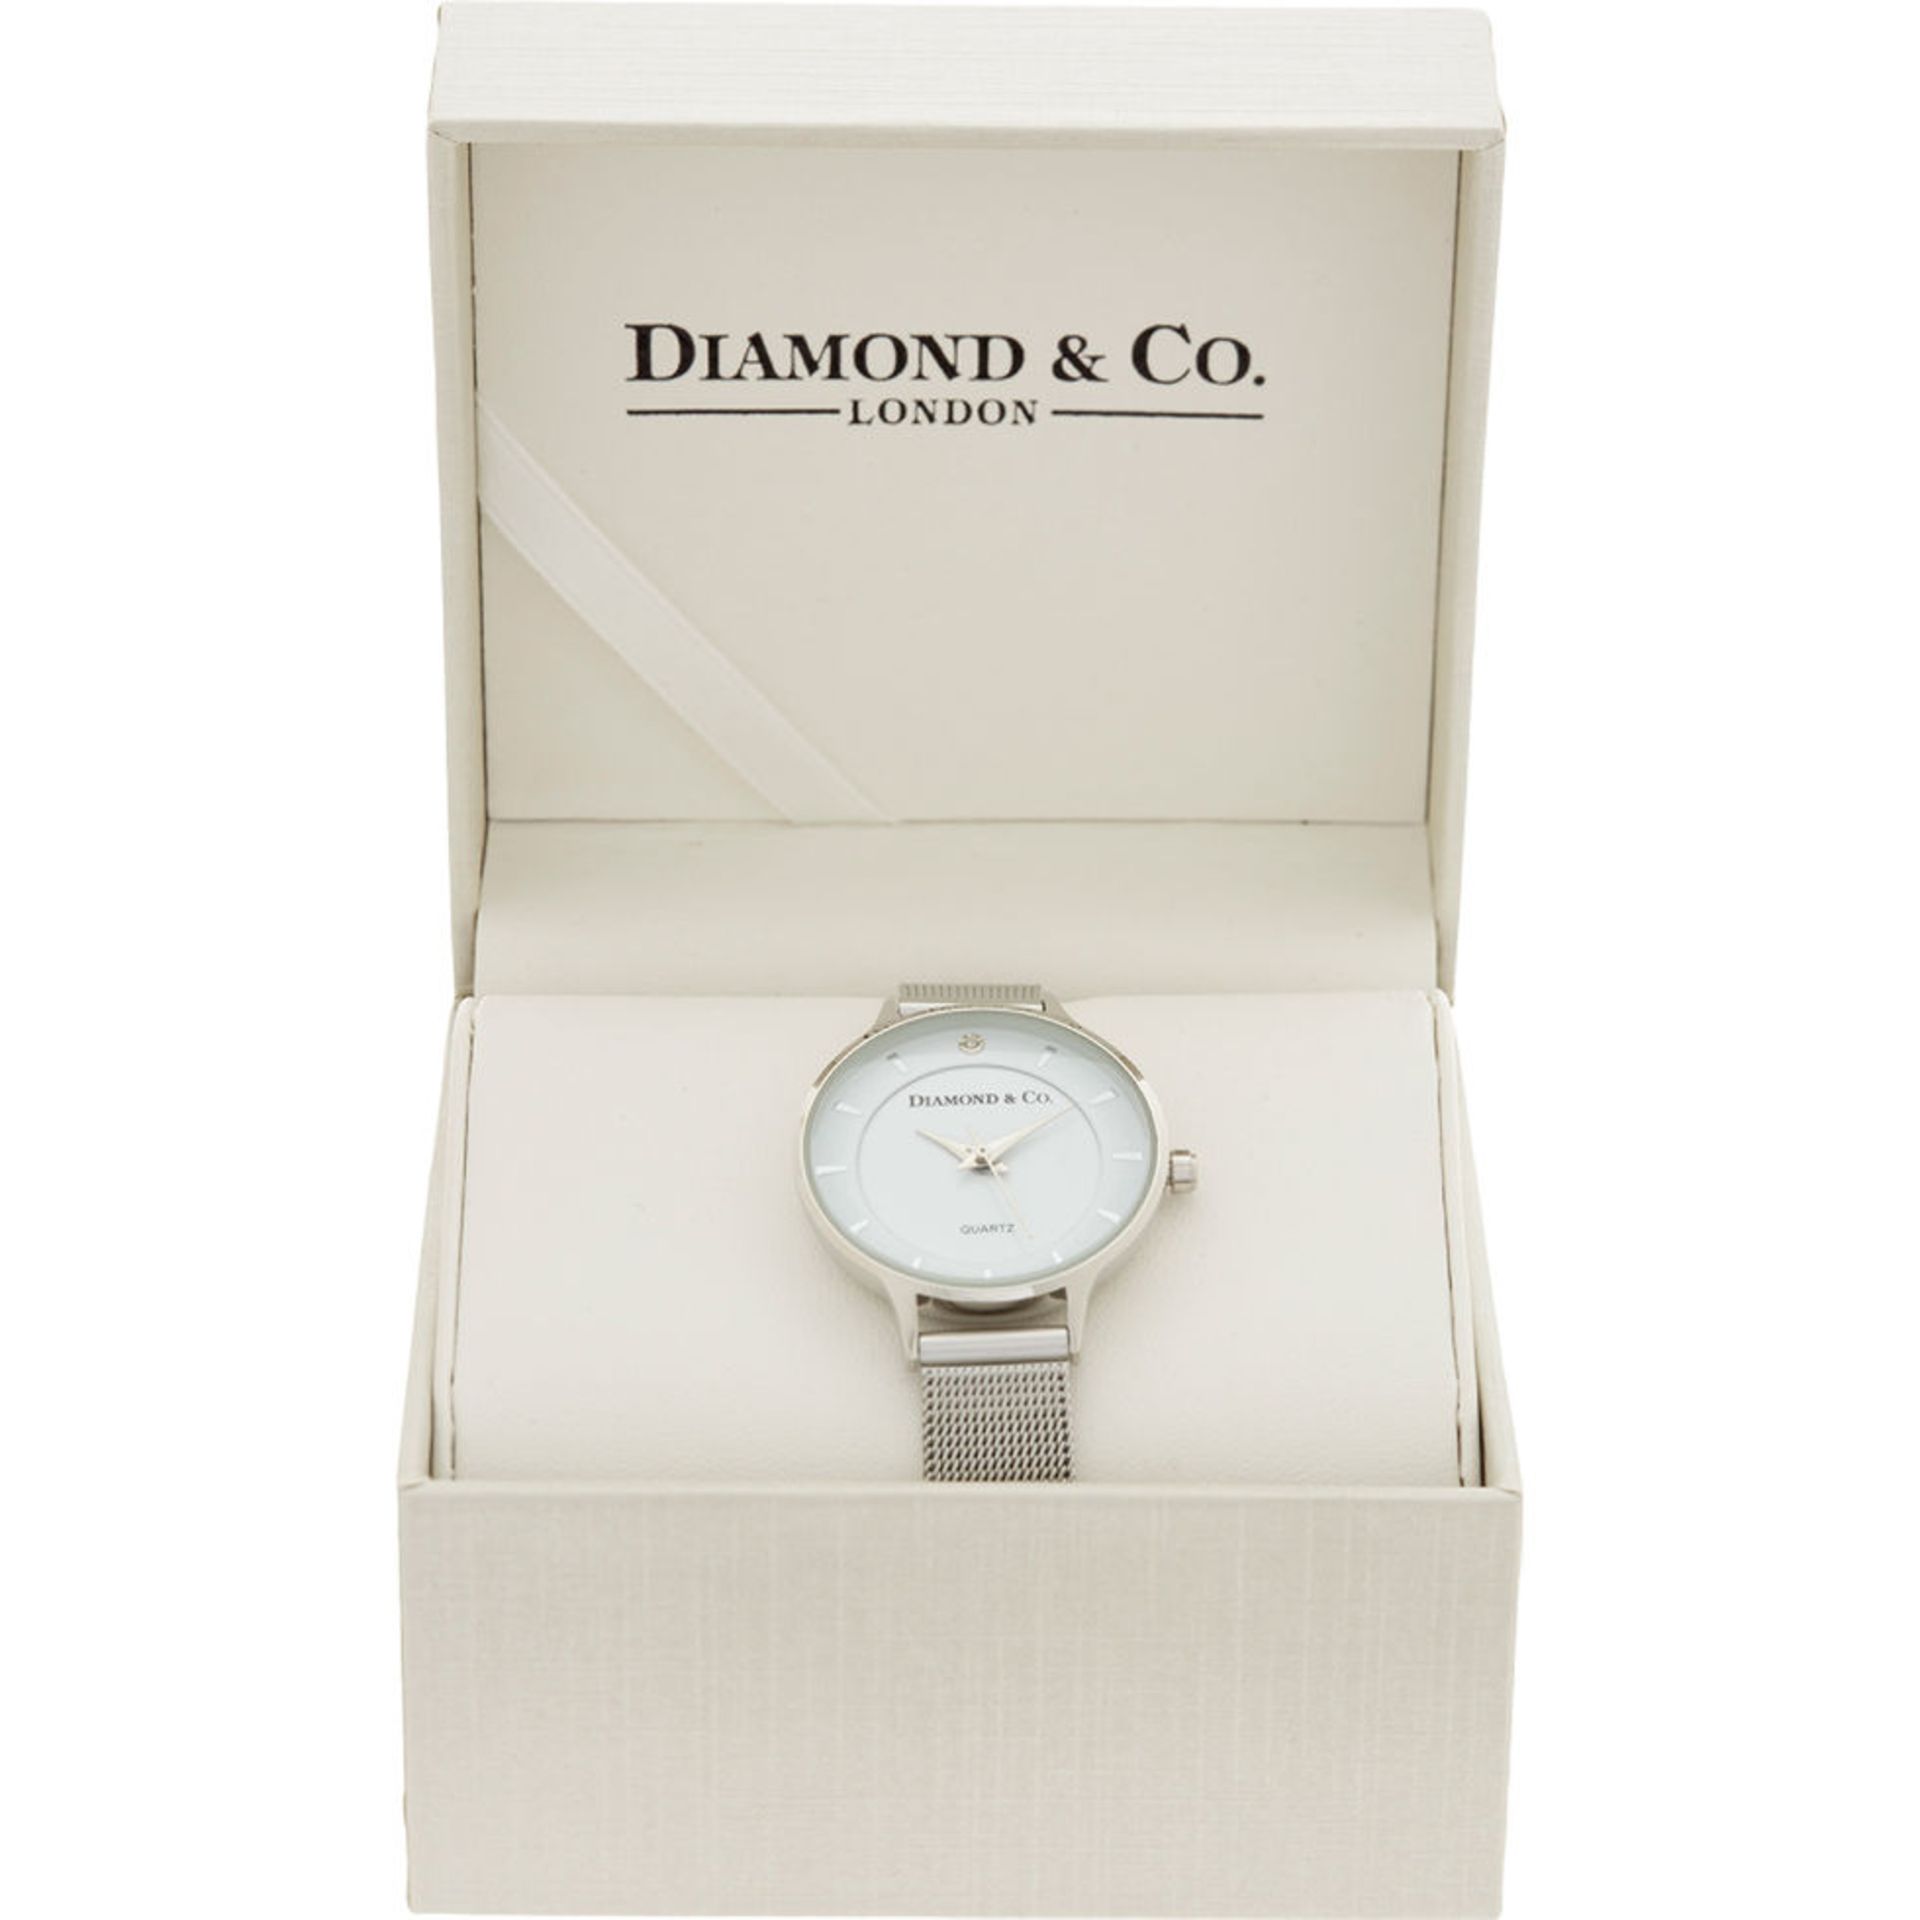 V Brand New Diamond & Co London Ladies Bracelet Watch - Gold